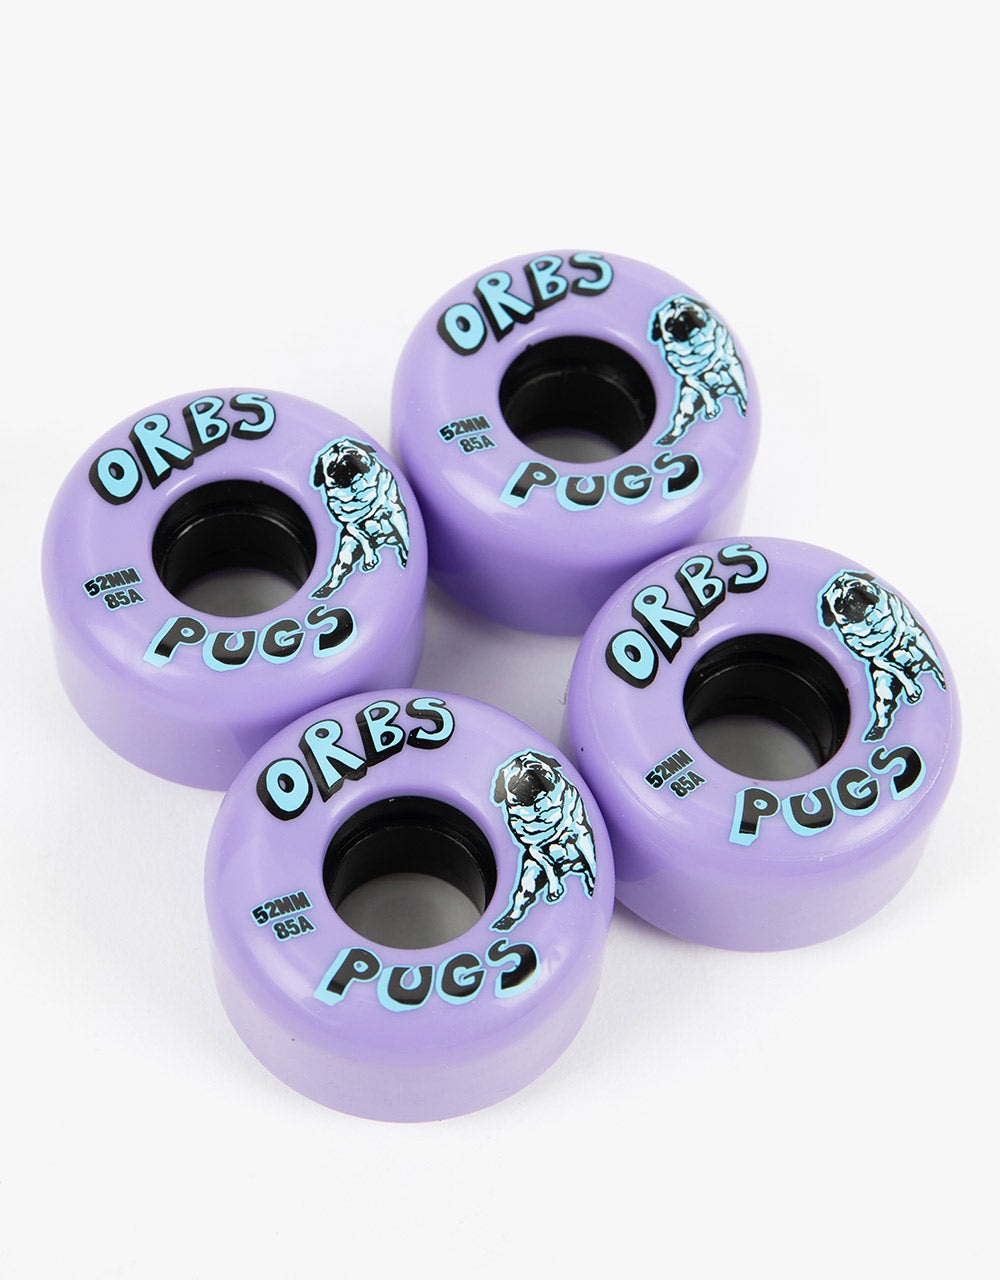 Orbs Pugs Conical 85a Skateboard Wheel - 52mm